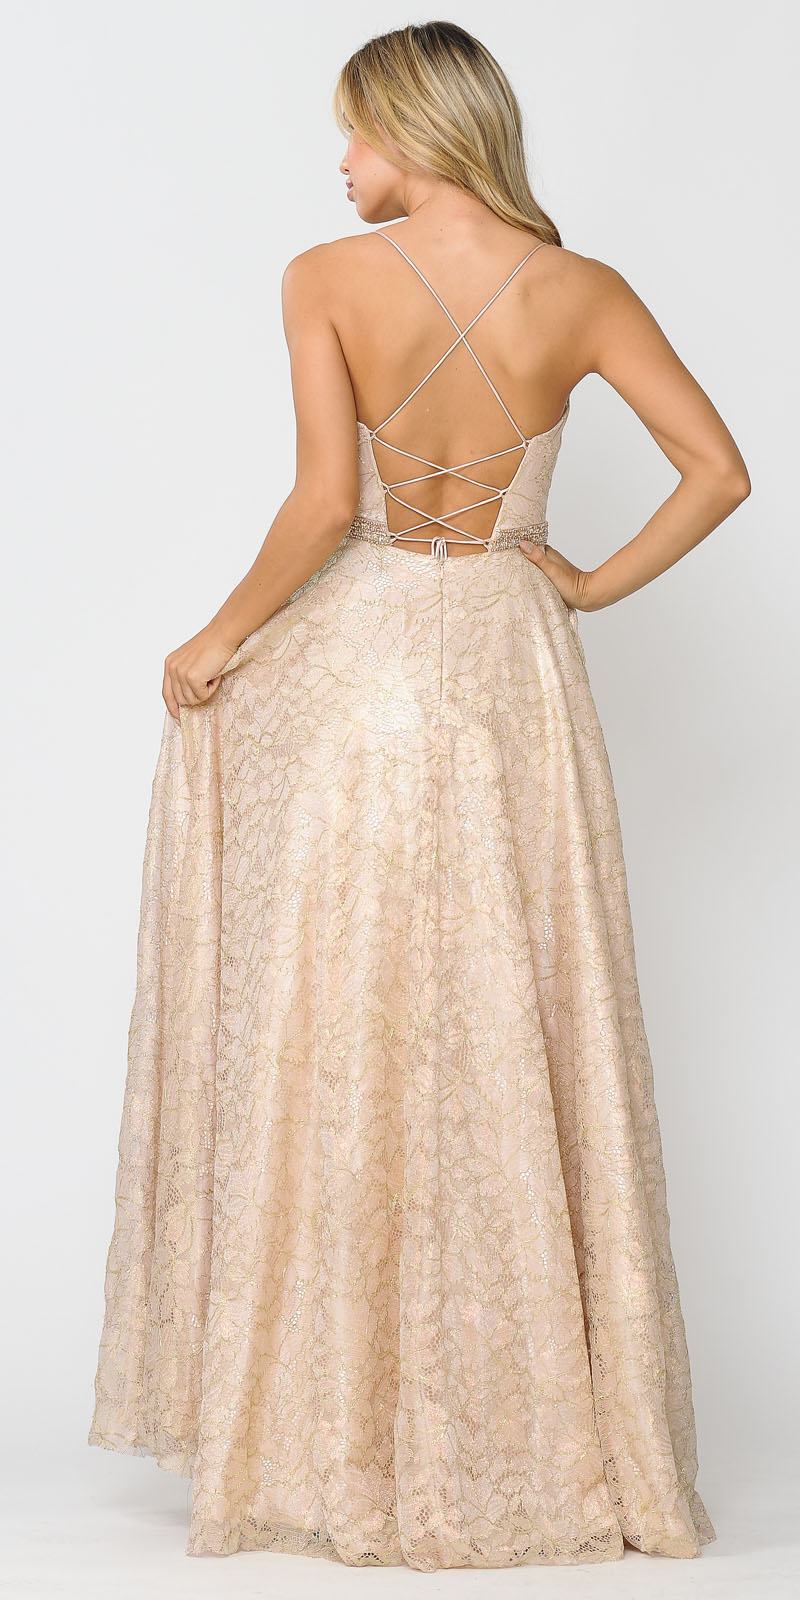 Poly USA 8562 Embellished Waist Lace Long Prom Dress Champagne